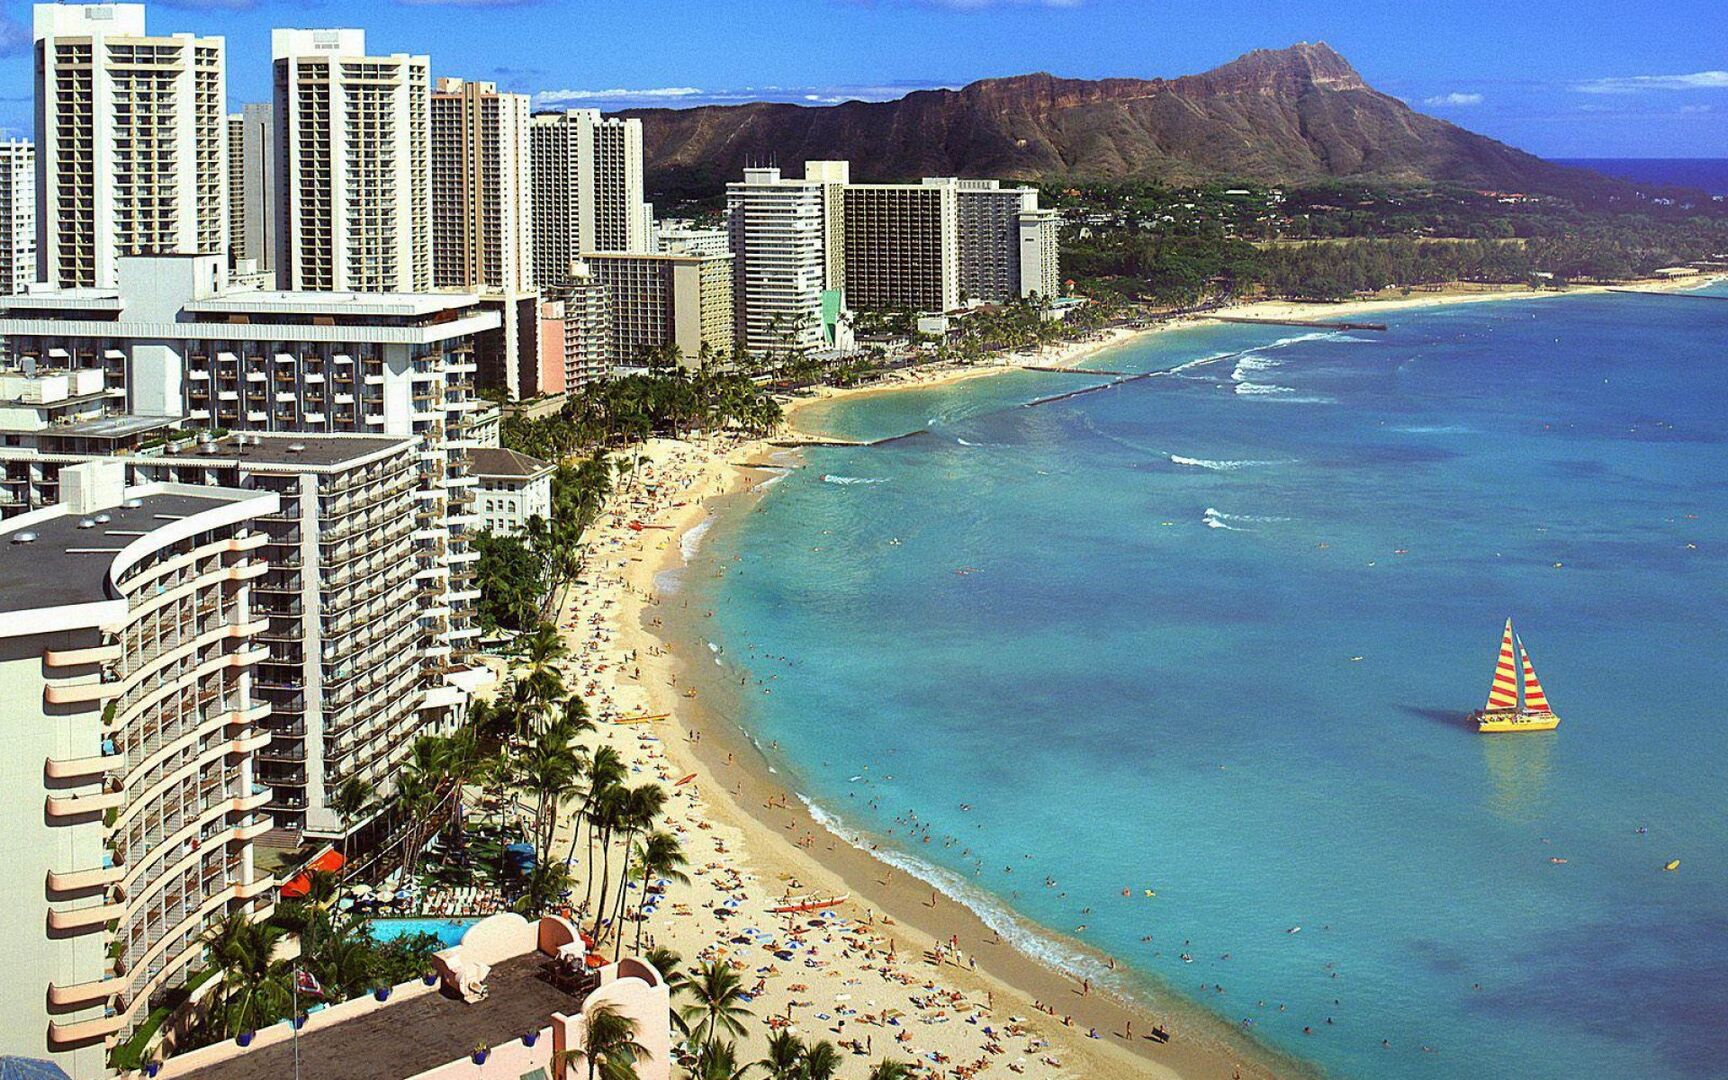 Waikiki Beach and Diamond Head View.